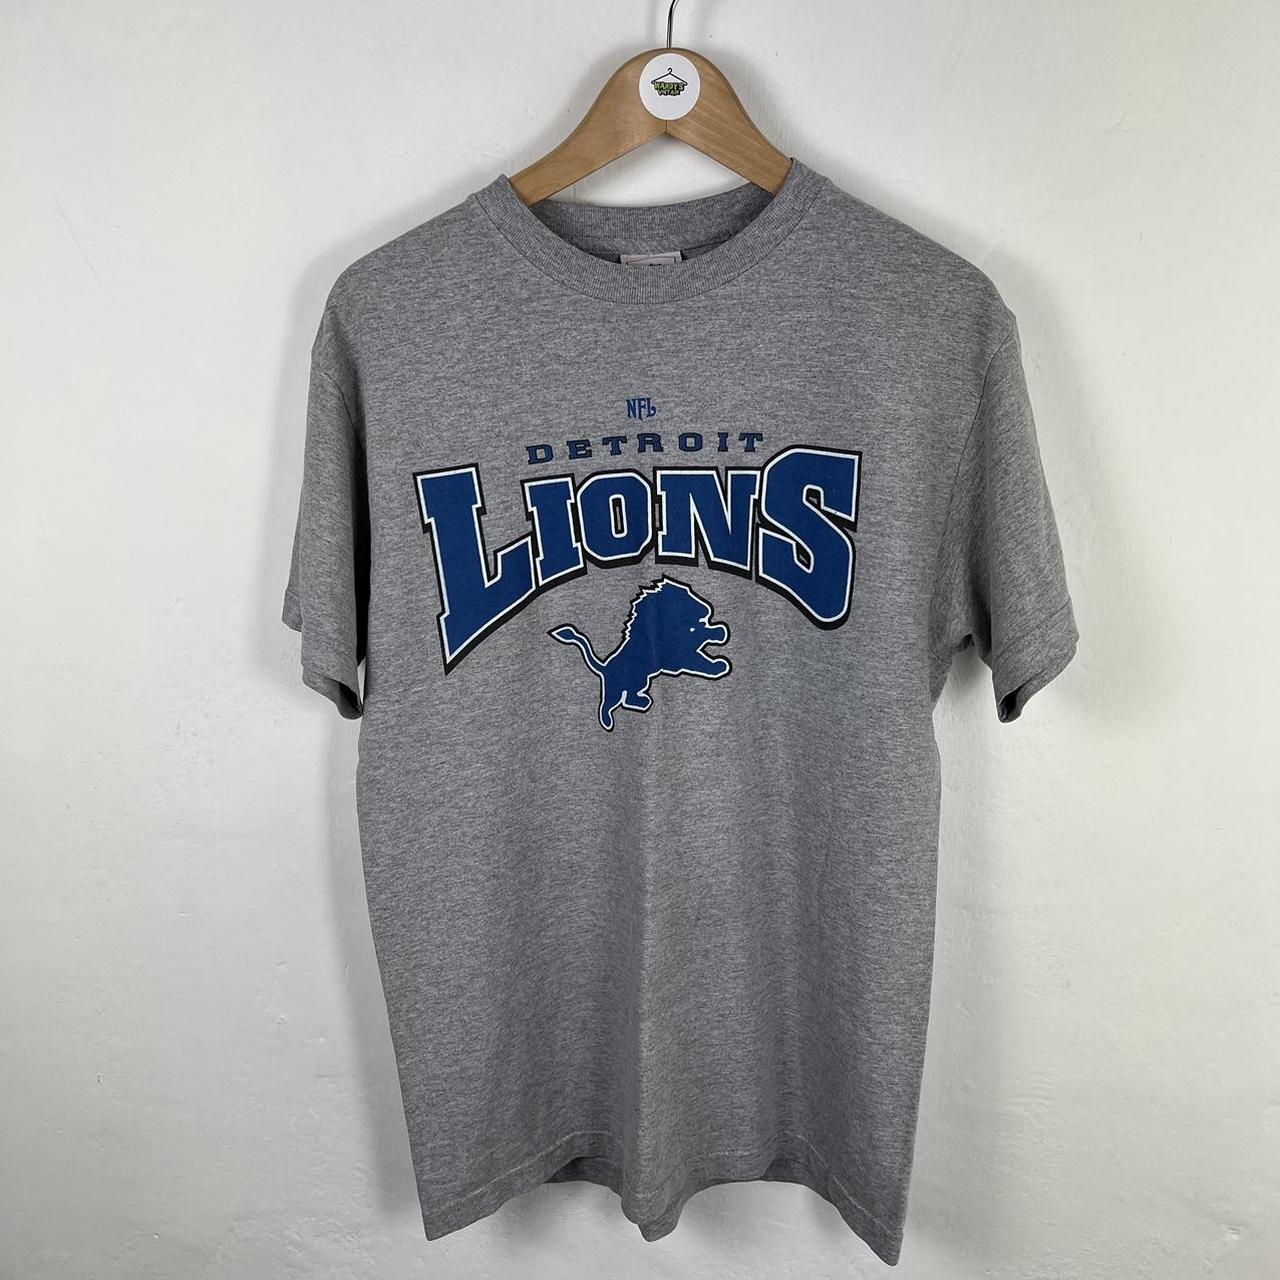 NFL Detroit lions t shirt medium